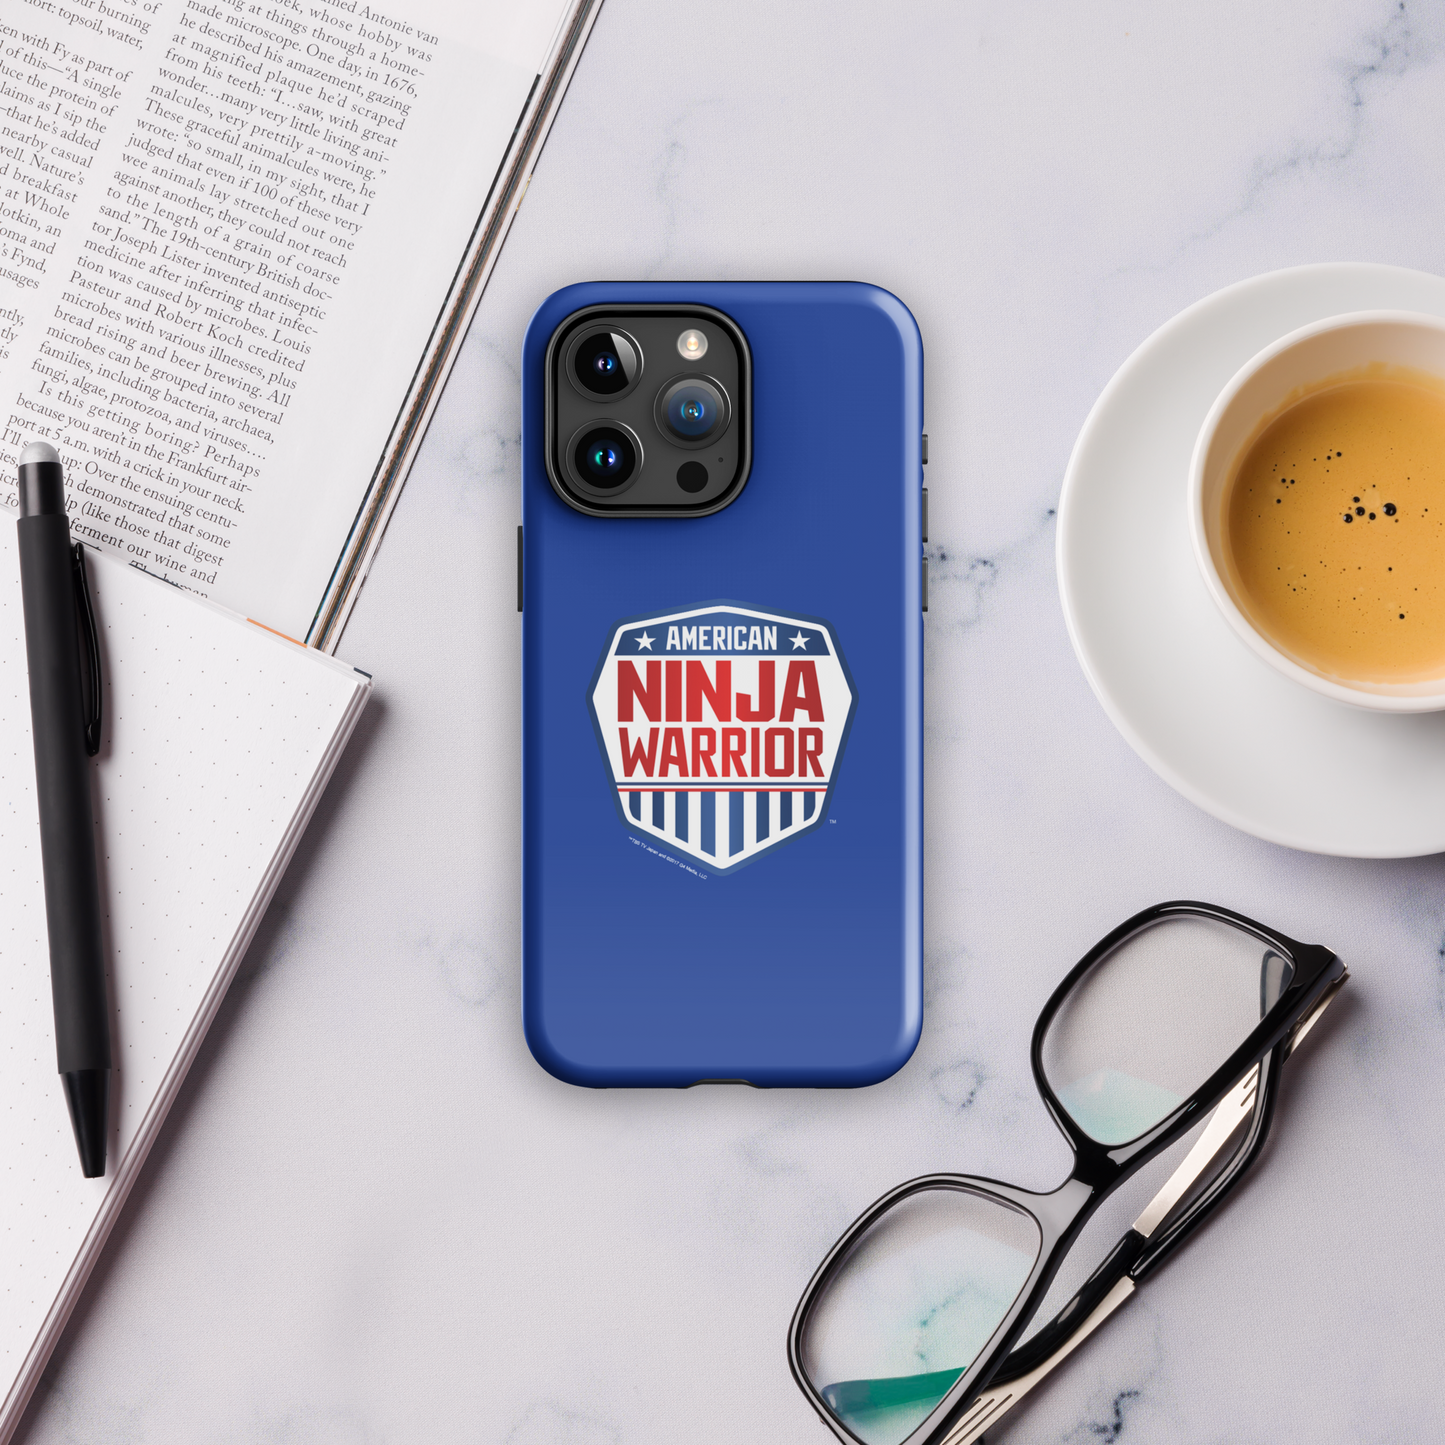 American Ninja Warrior Royal Blue Tough Phone Case - iPhone